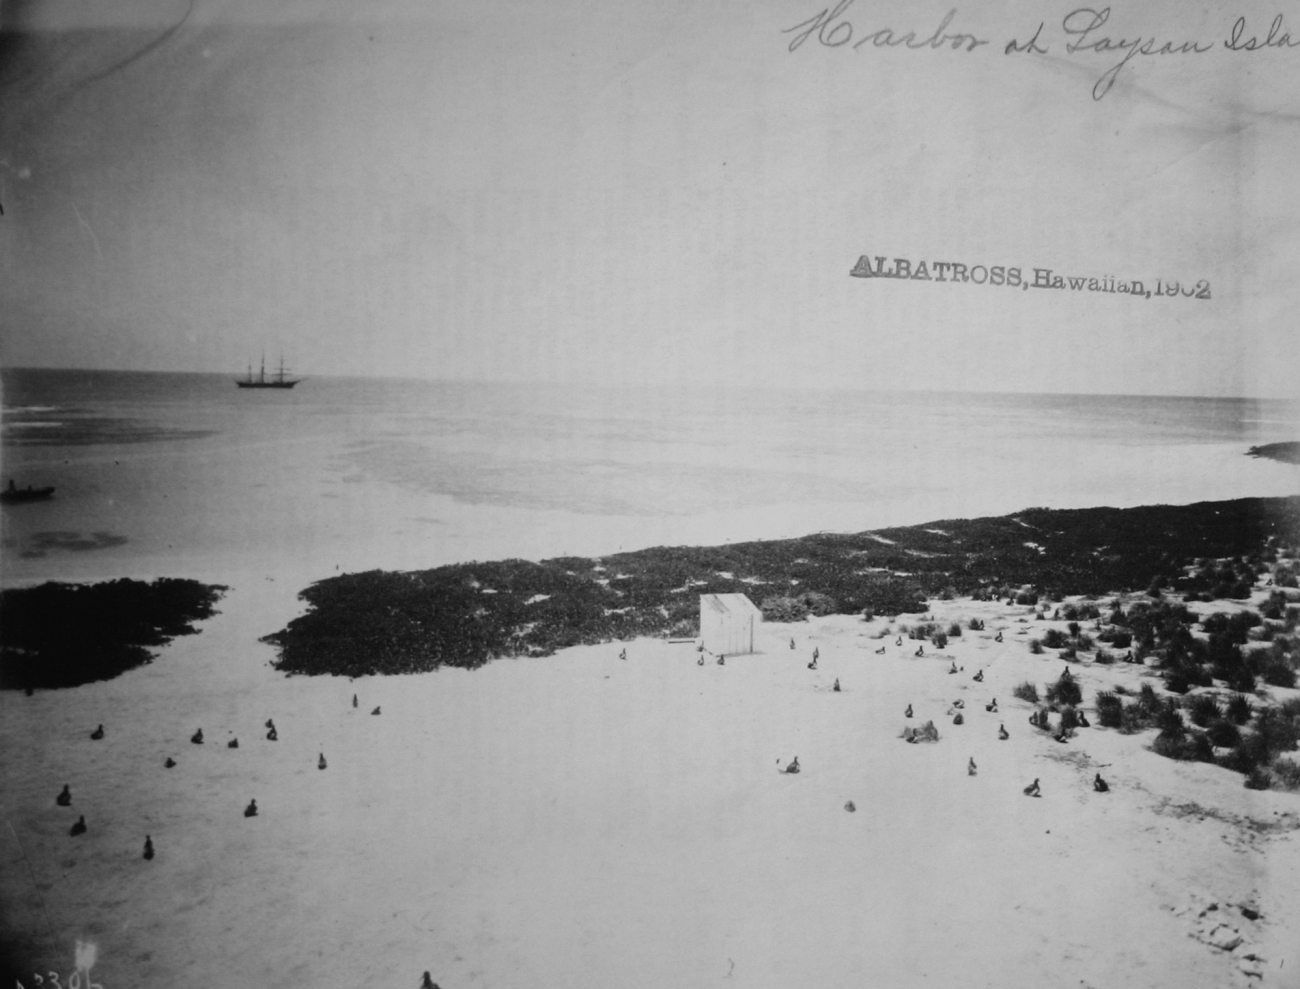 Albatross, HI, 1902, harbor at Laysan Island